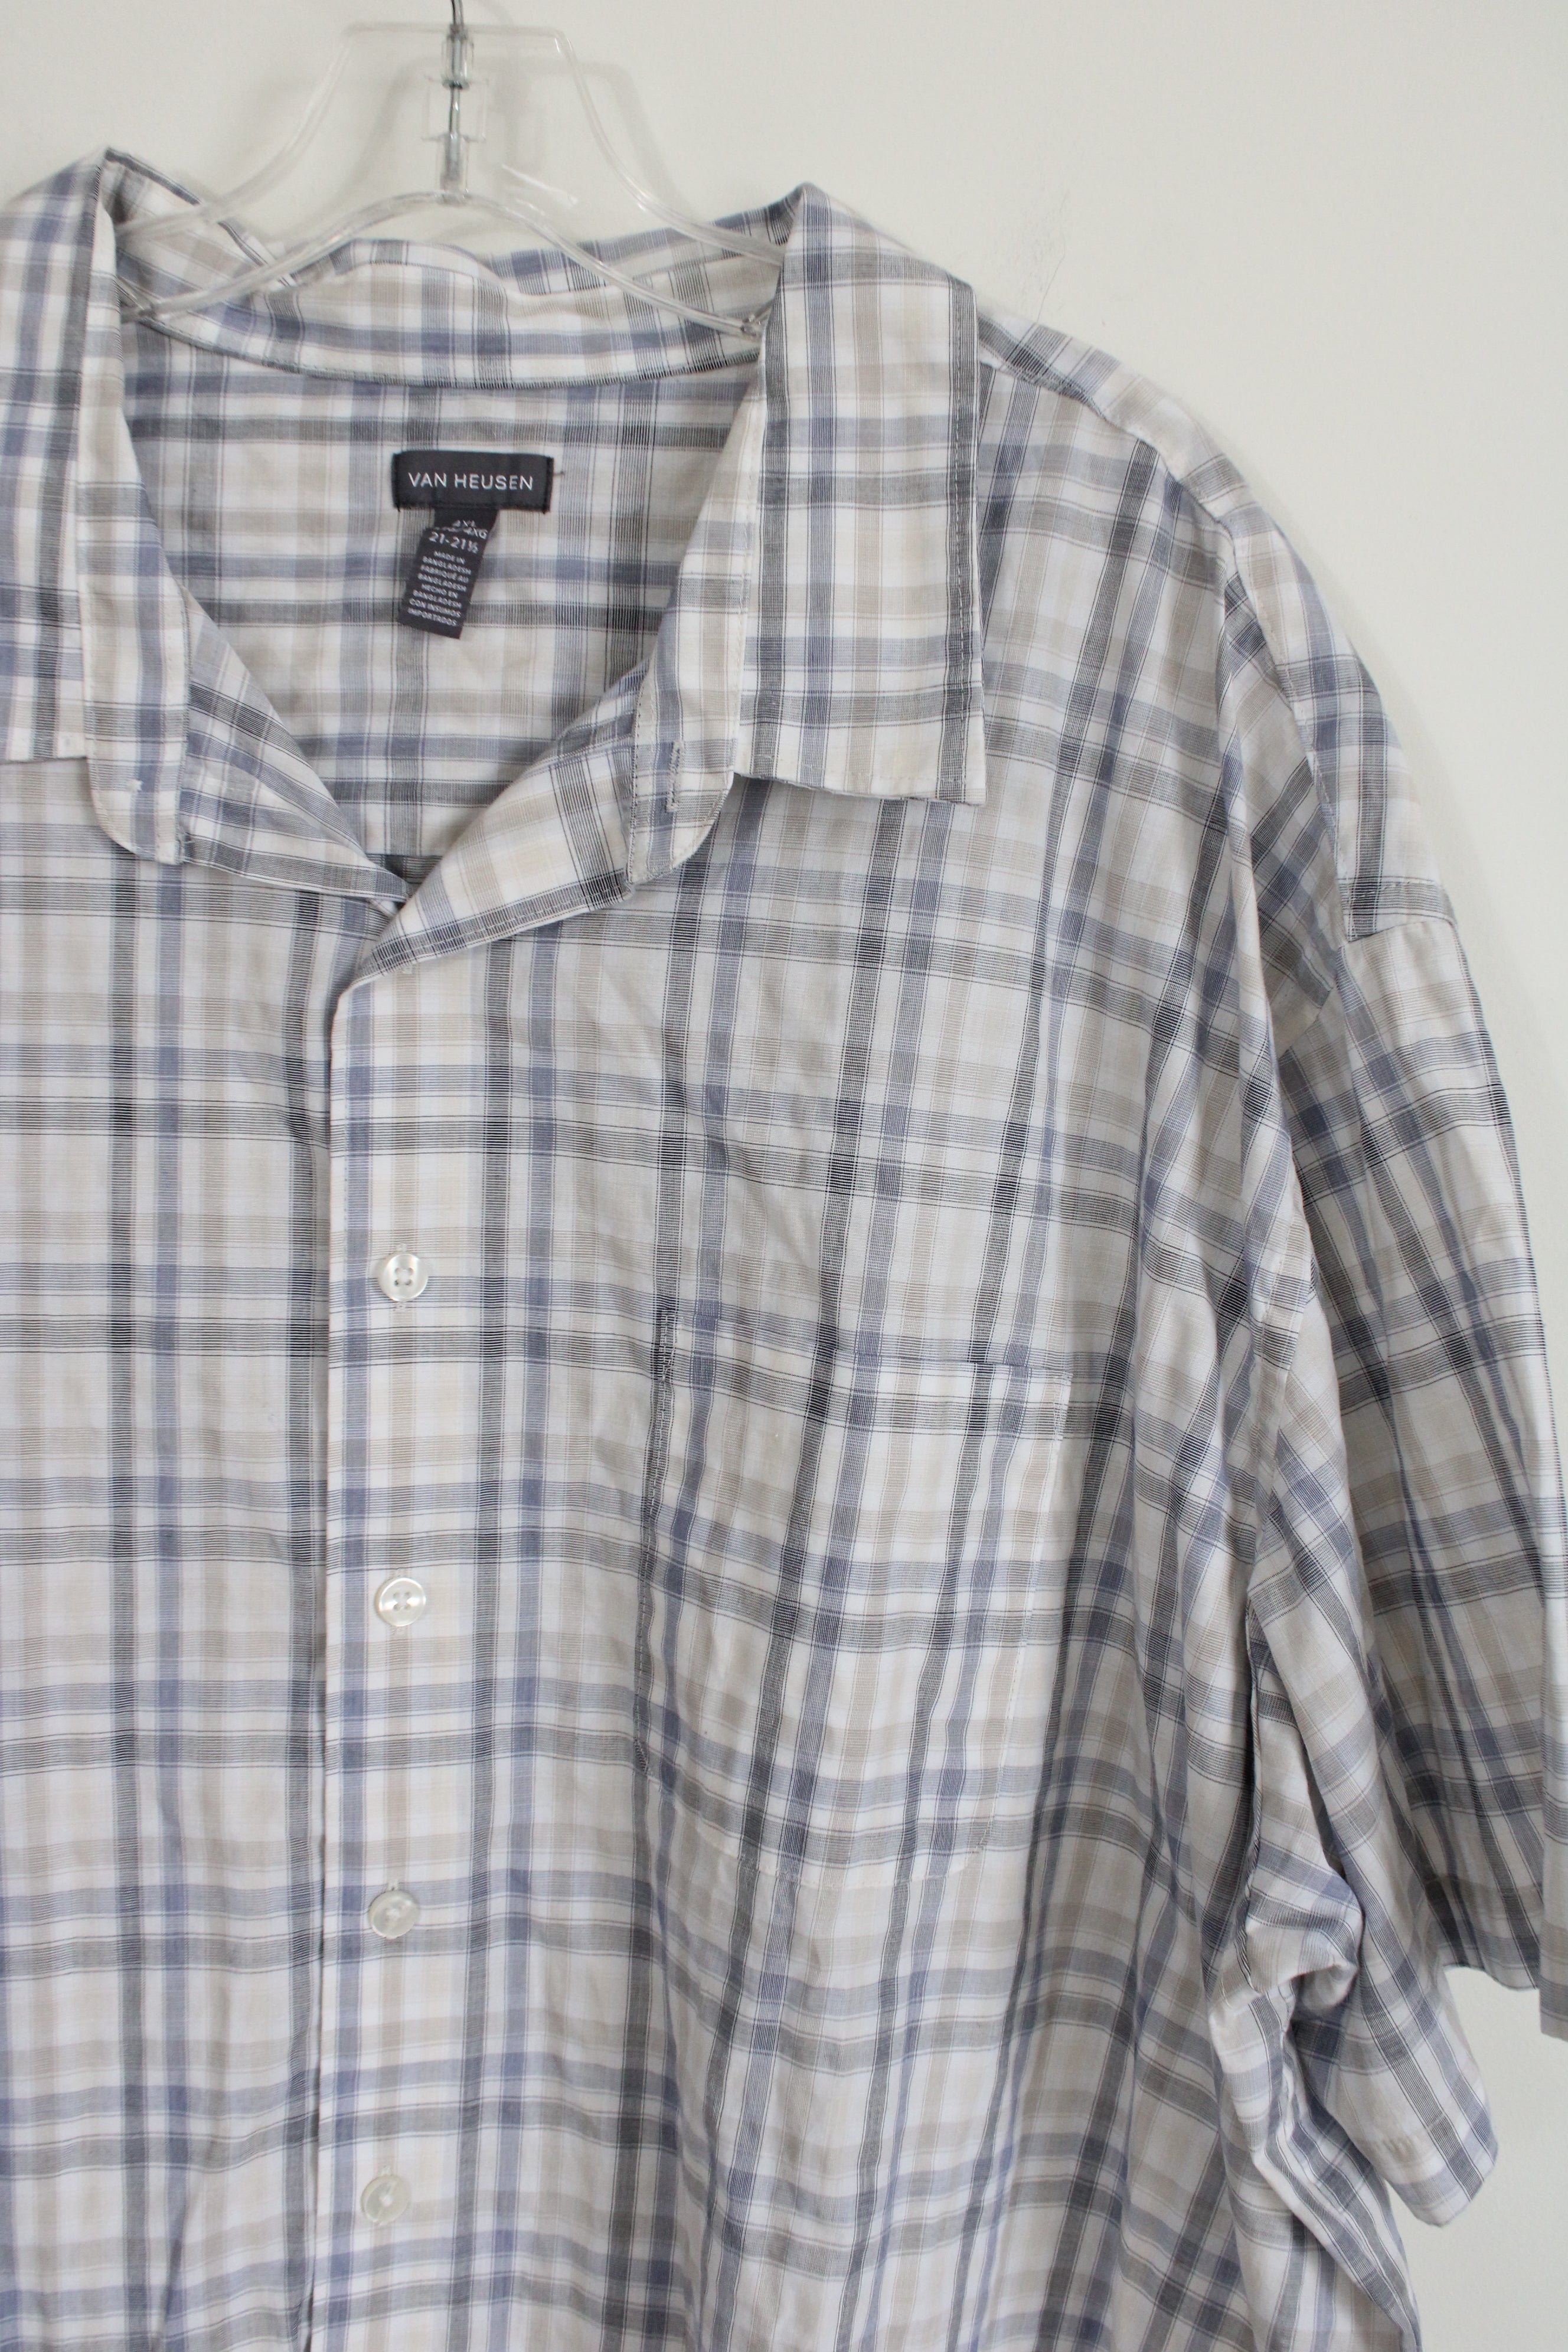 Van Heusen Blue White Tan Plaid Short Sleeved Button Down Shirt | 4XL